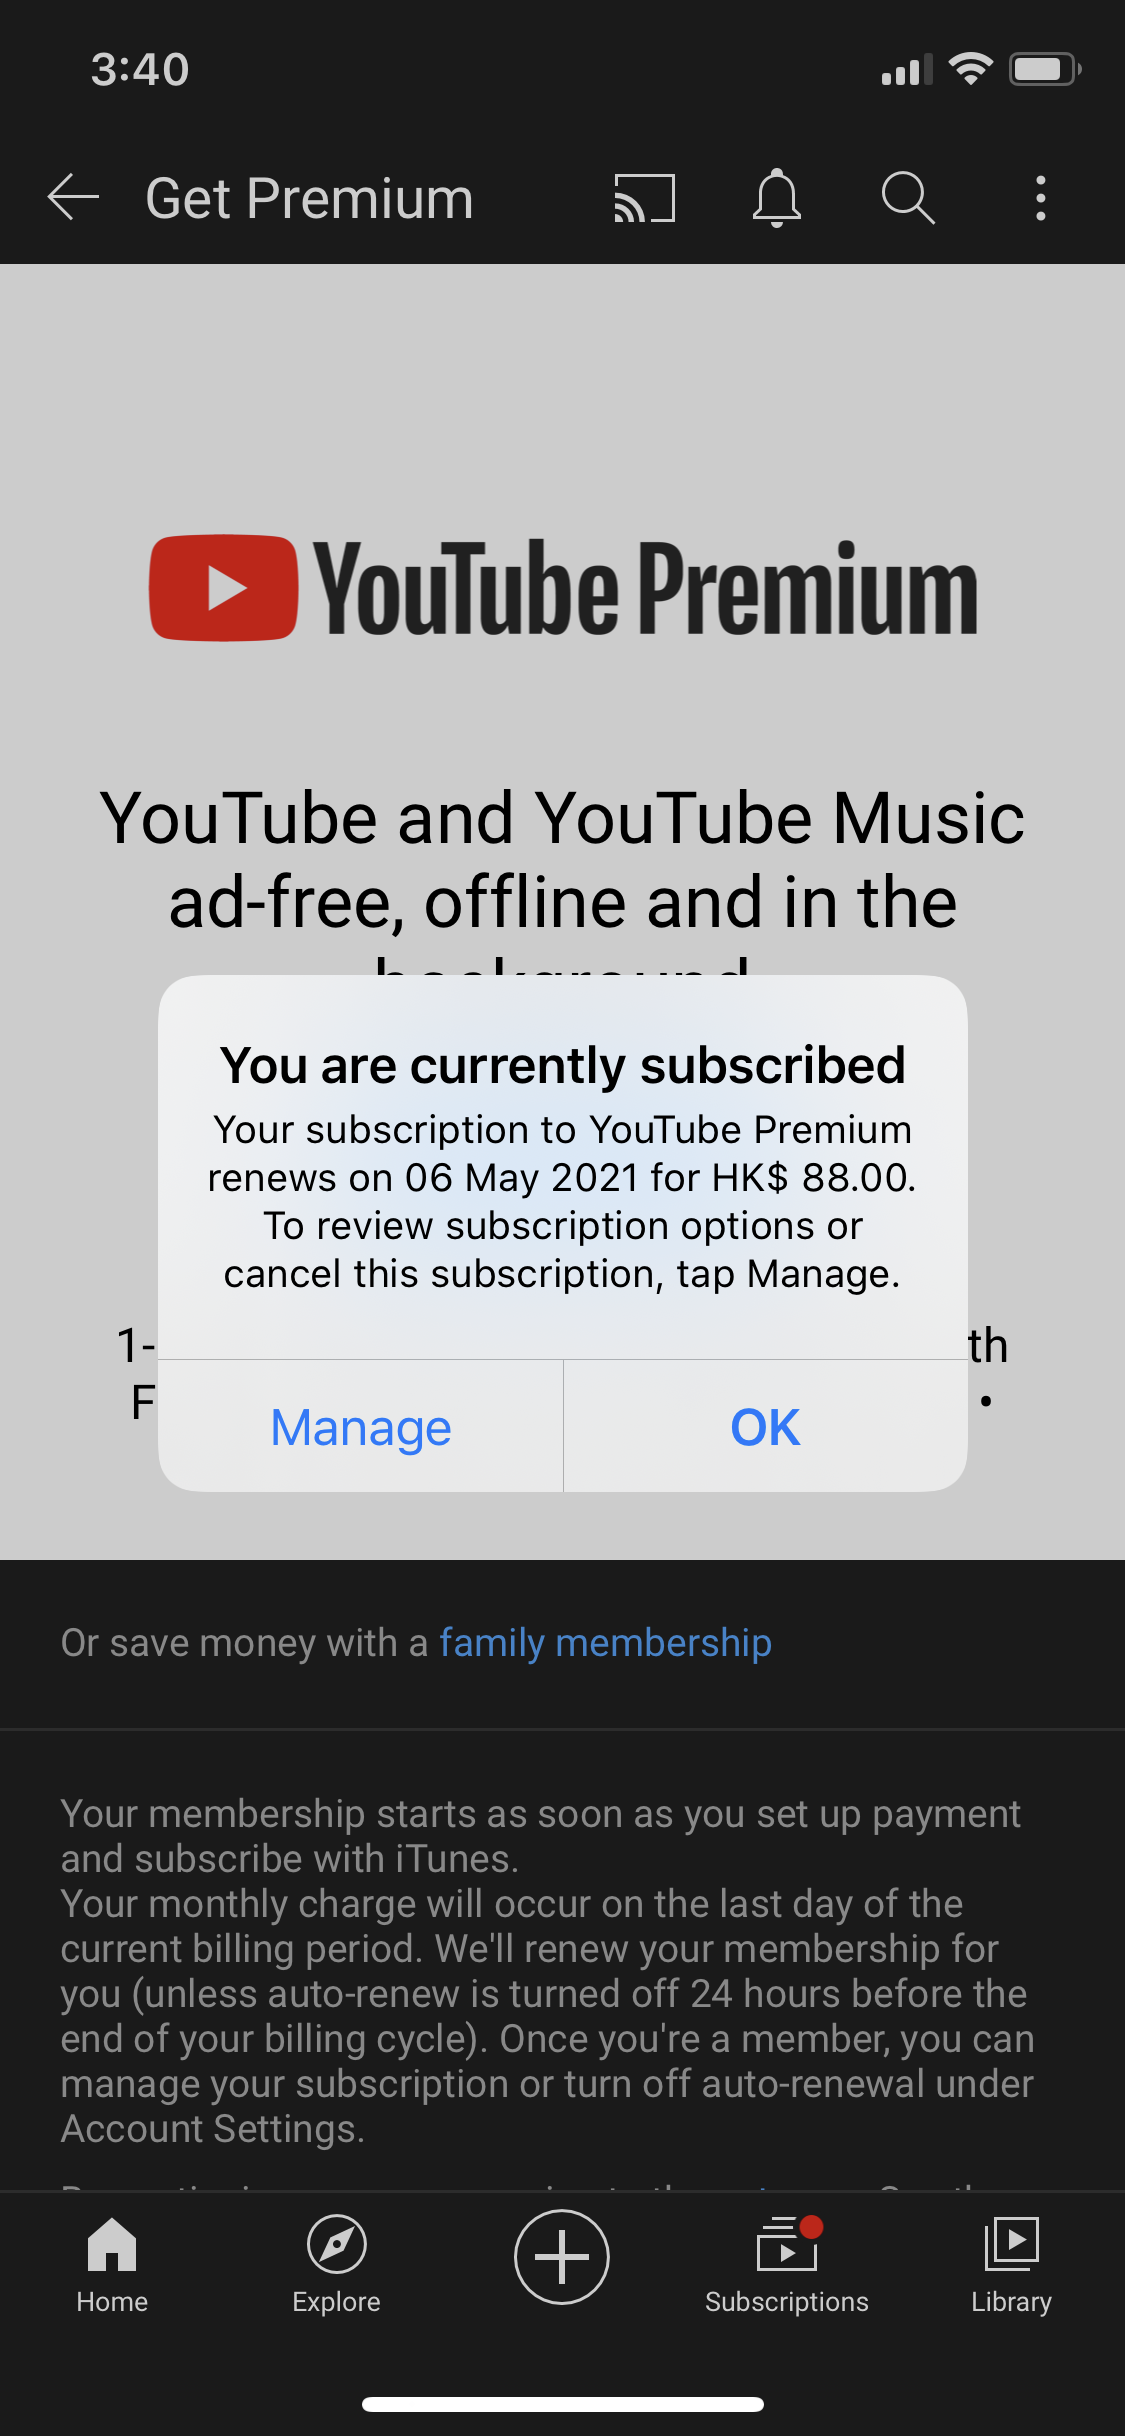 YouTube Premium not working - Apple Community